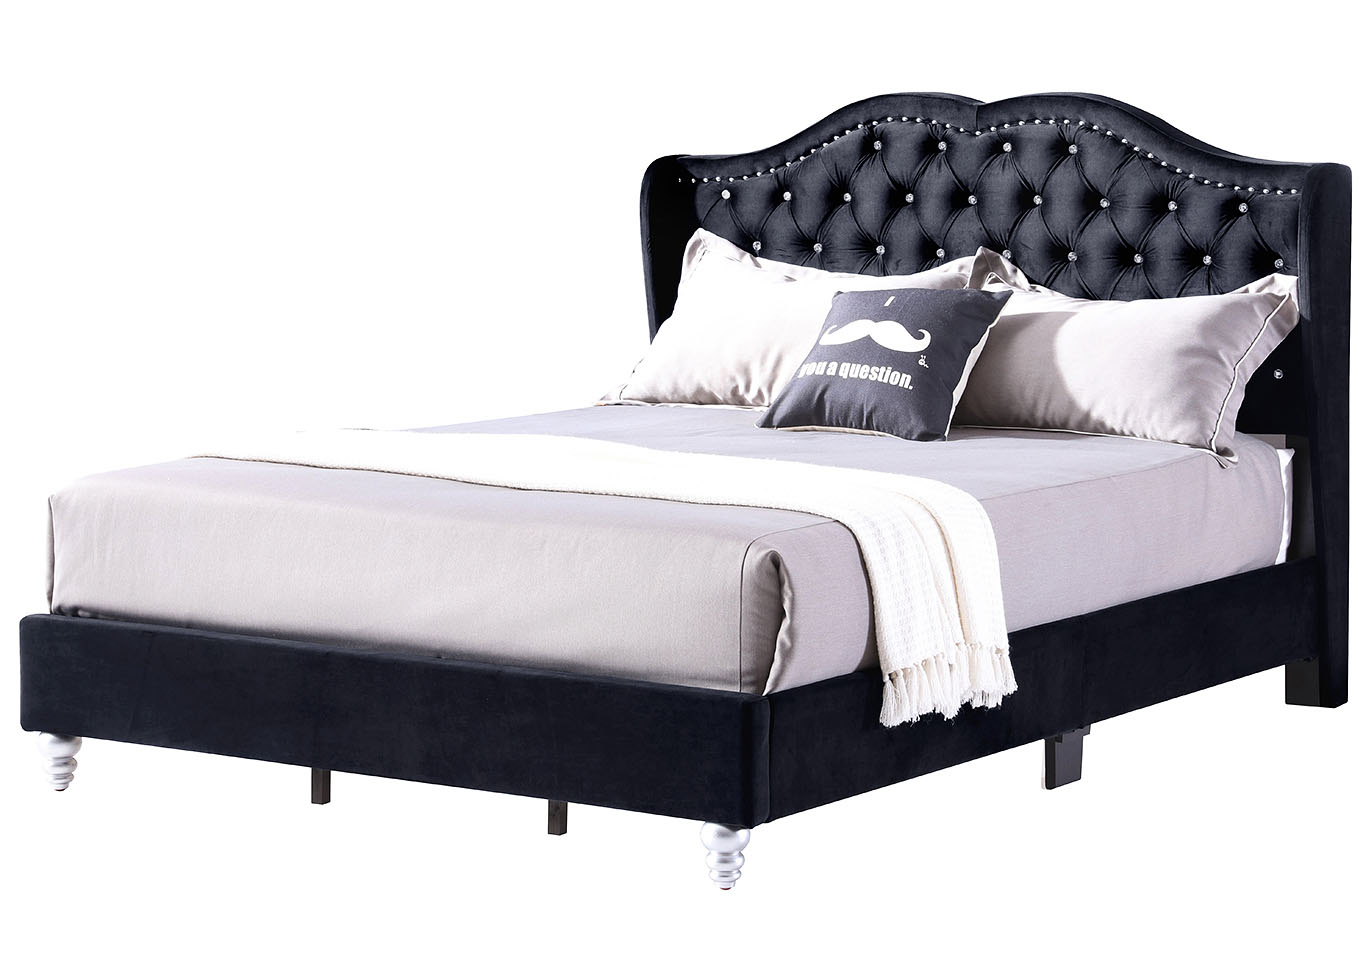 Black Micro Suede Upholstered King Bed, Black Upholstered King Bed